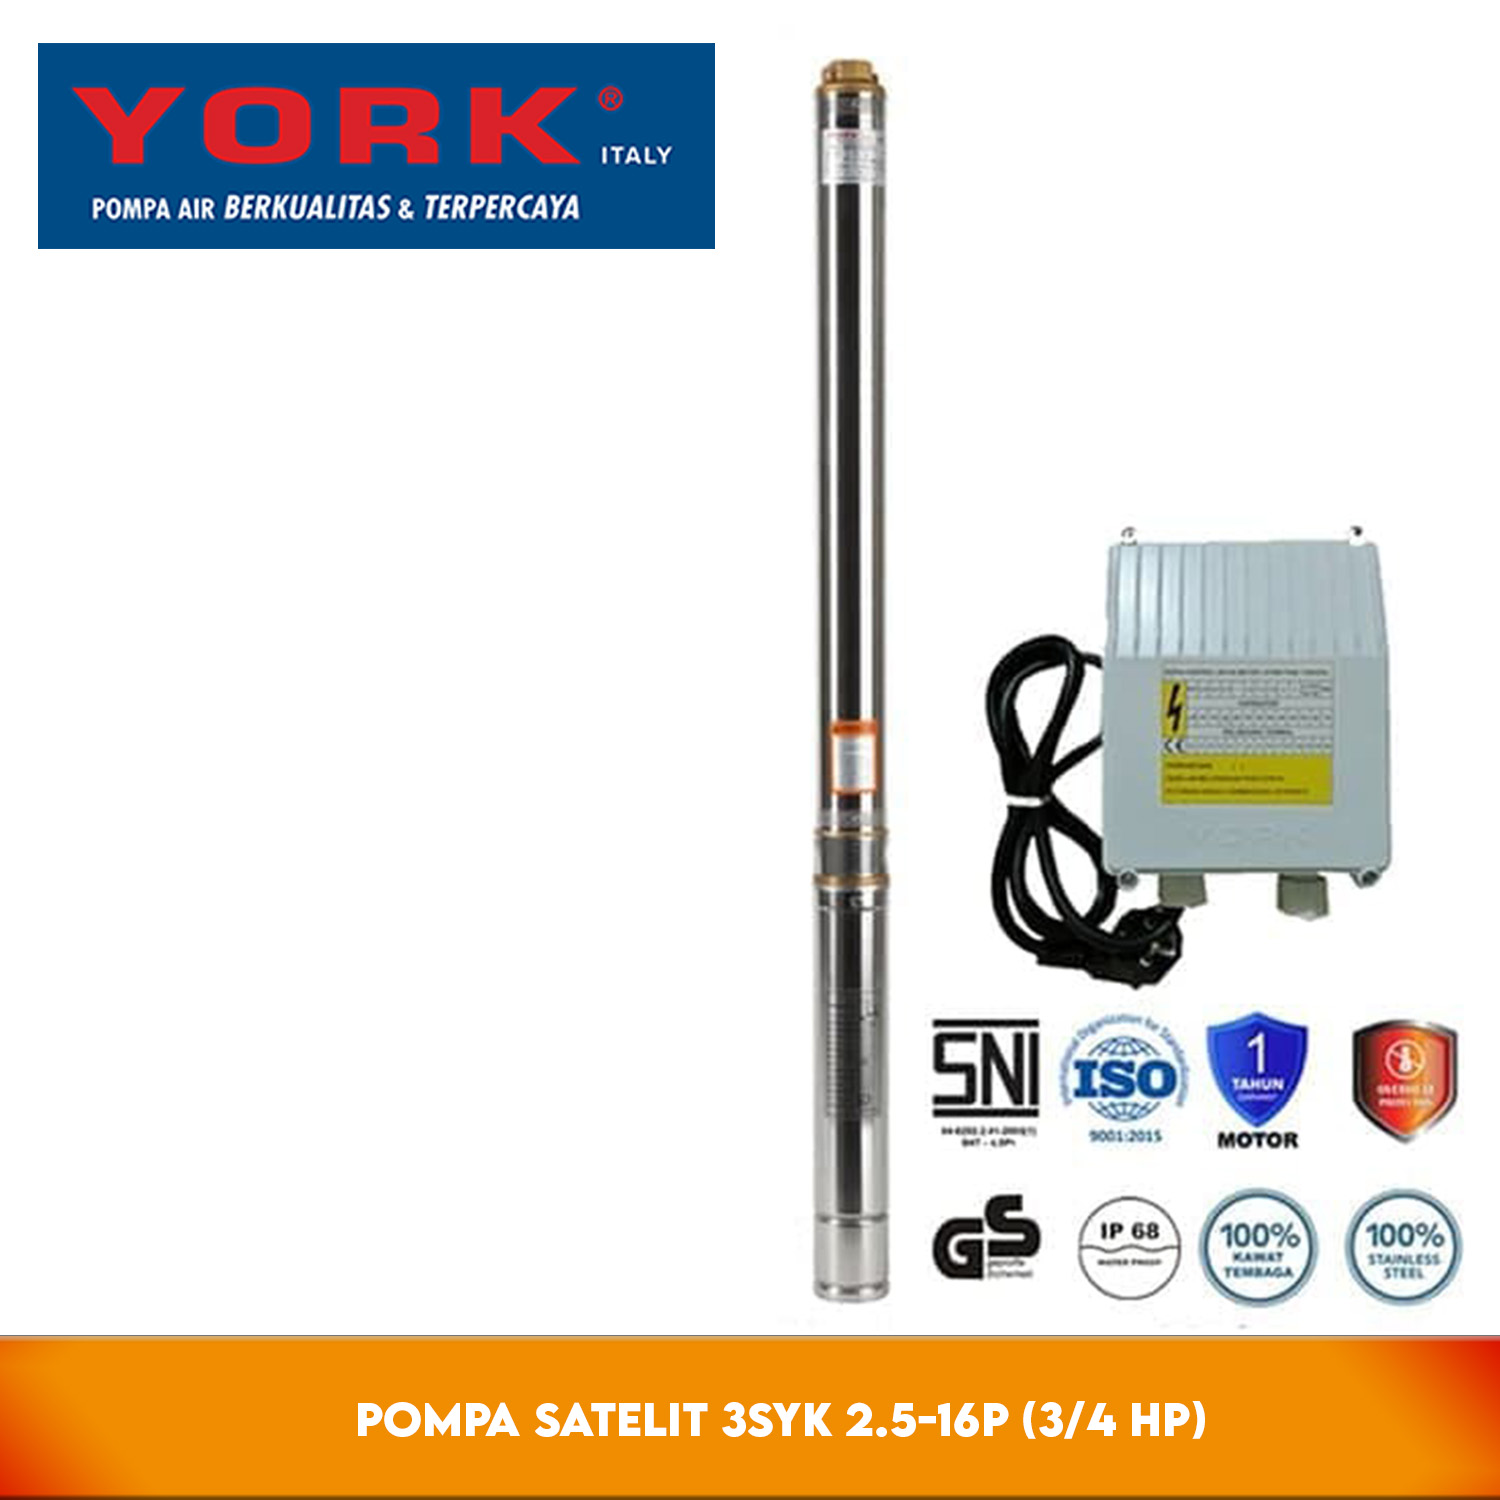 York 3SYK 2.5-16P (3/4 HP) + C.BOX + 50 M - Pompa Satelit 